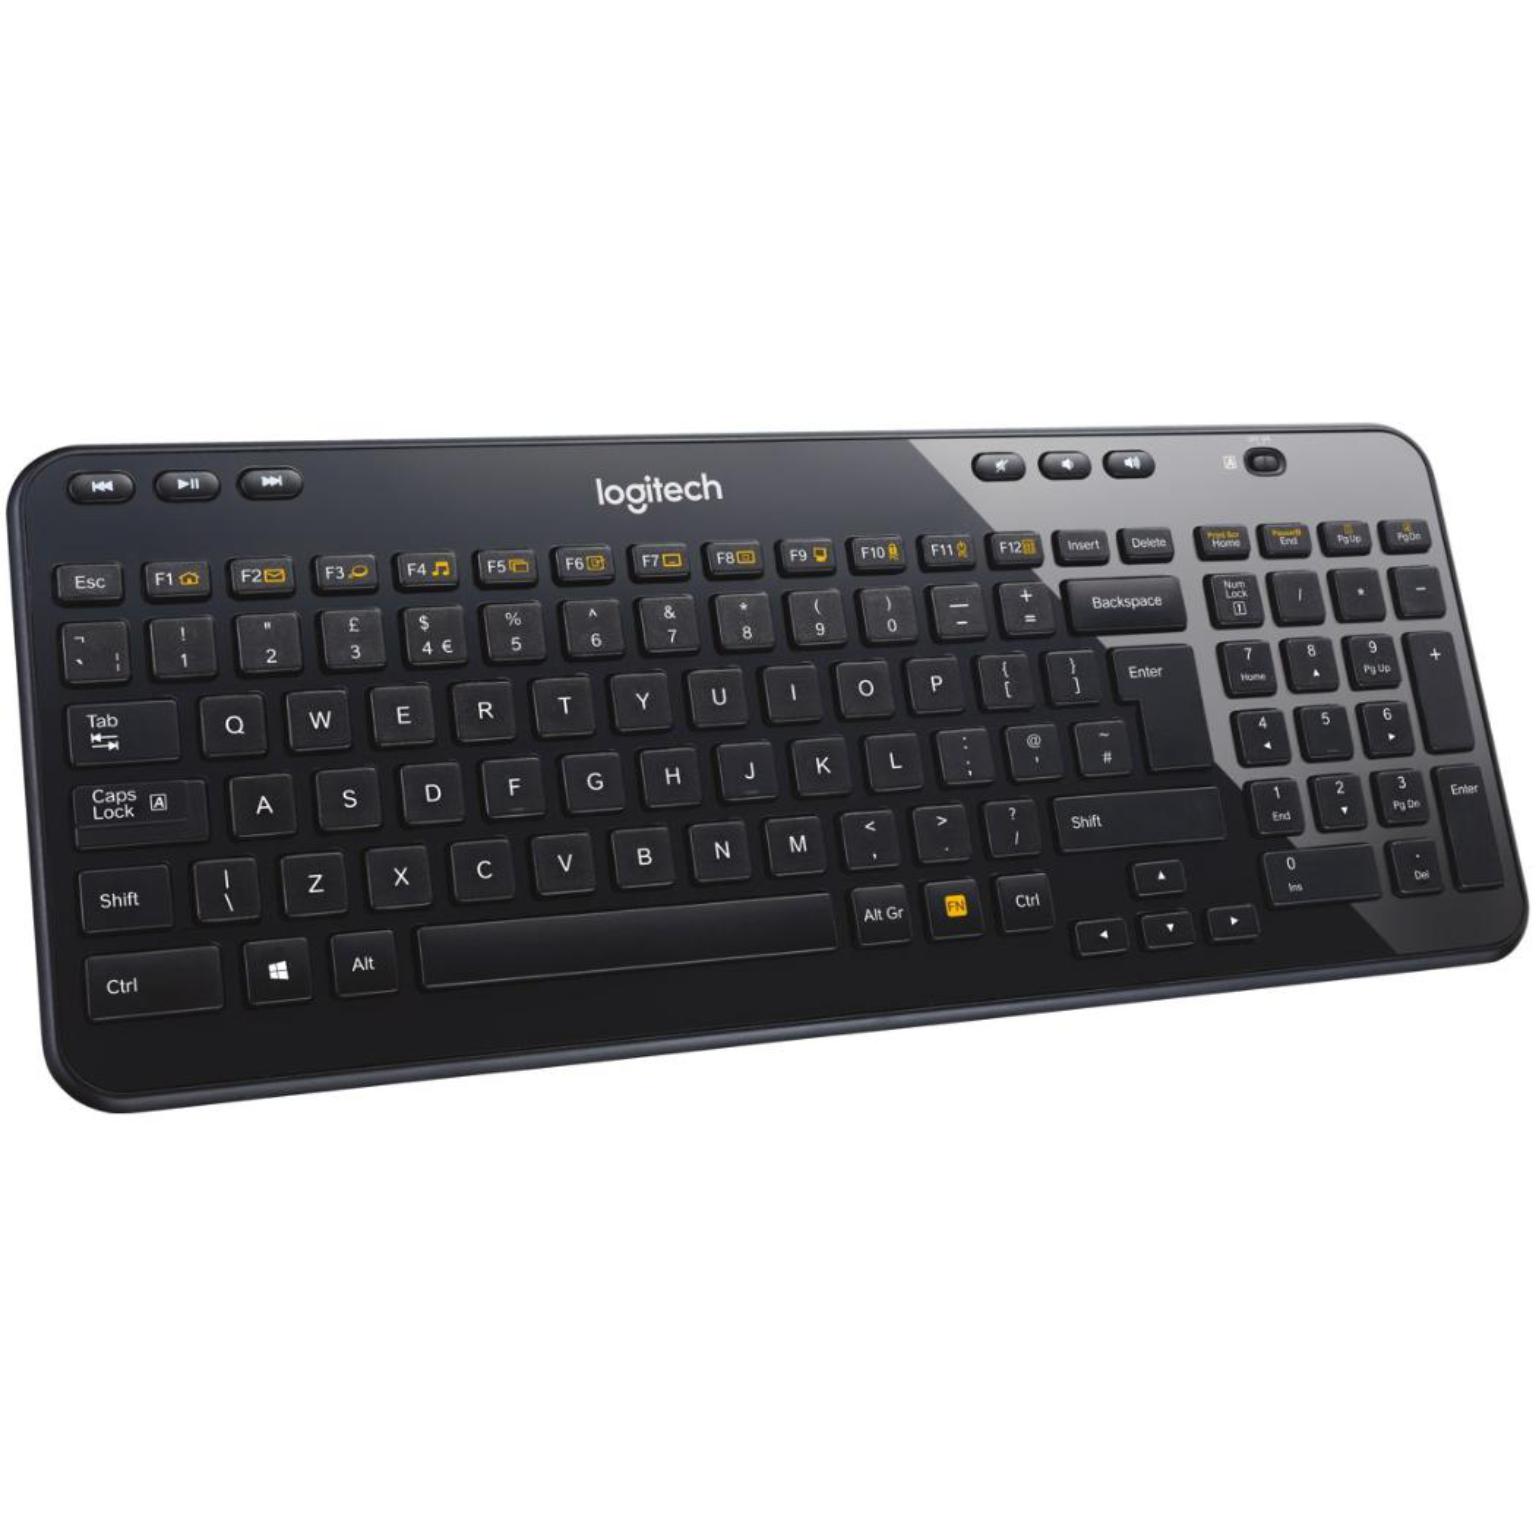 Draadloos toetsenbord - Logitech - Merk: Logitech K360, QWERTY - Aansluiting: Draadloos USB, Extra: Compact, Voeding: AA batterijen (incl)